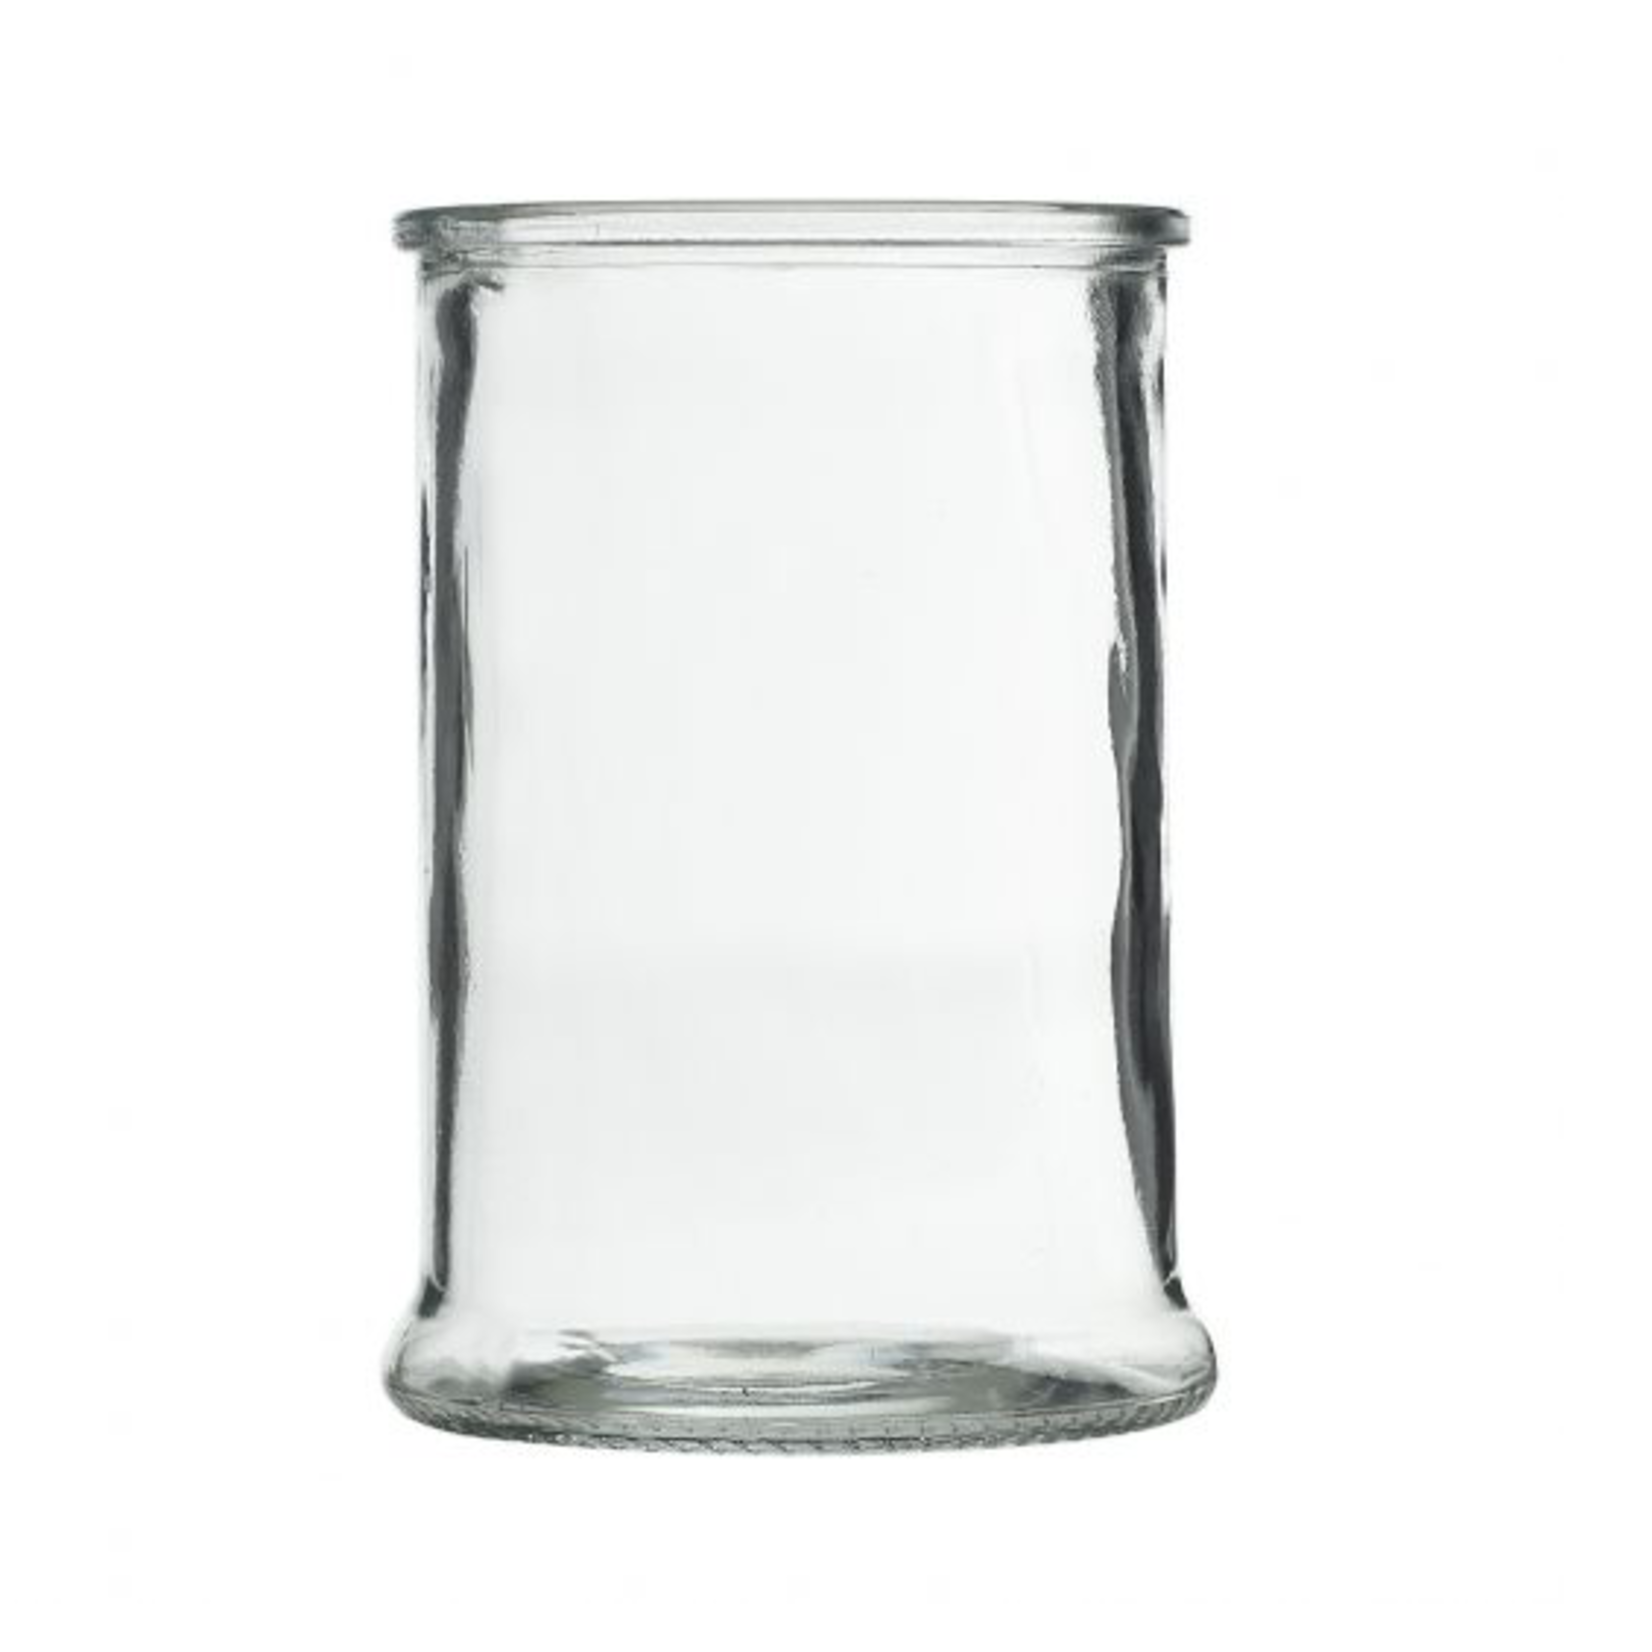 4.5"H X 3" VEZA VASE GLASS (AD)